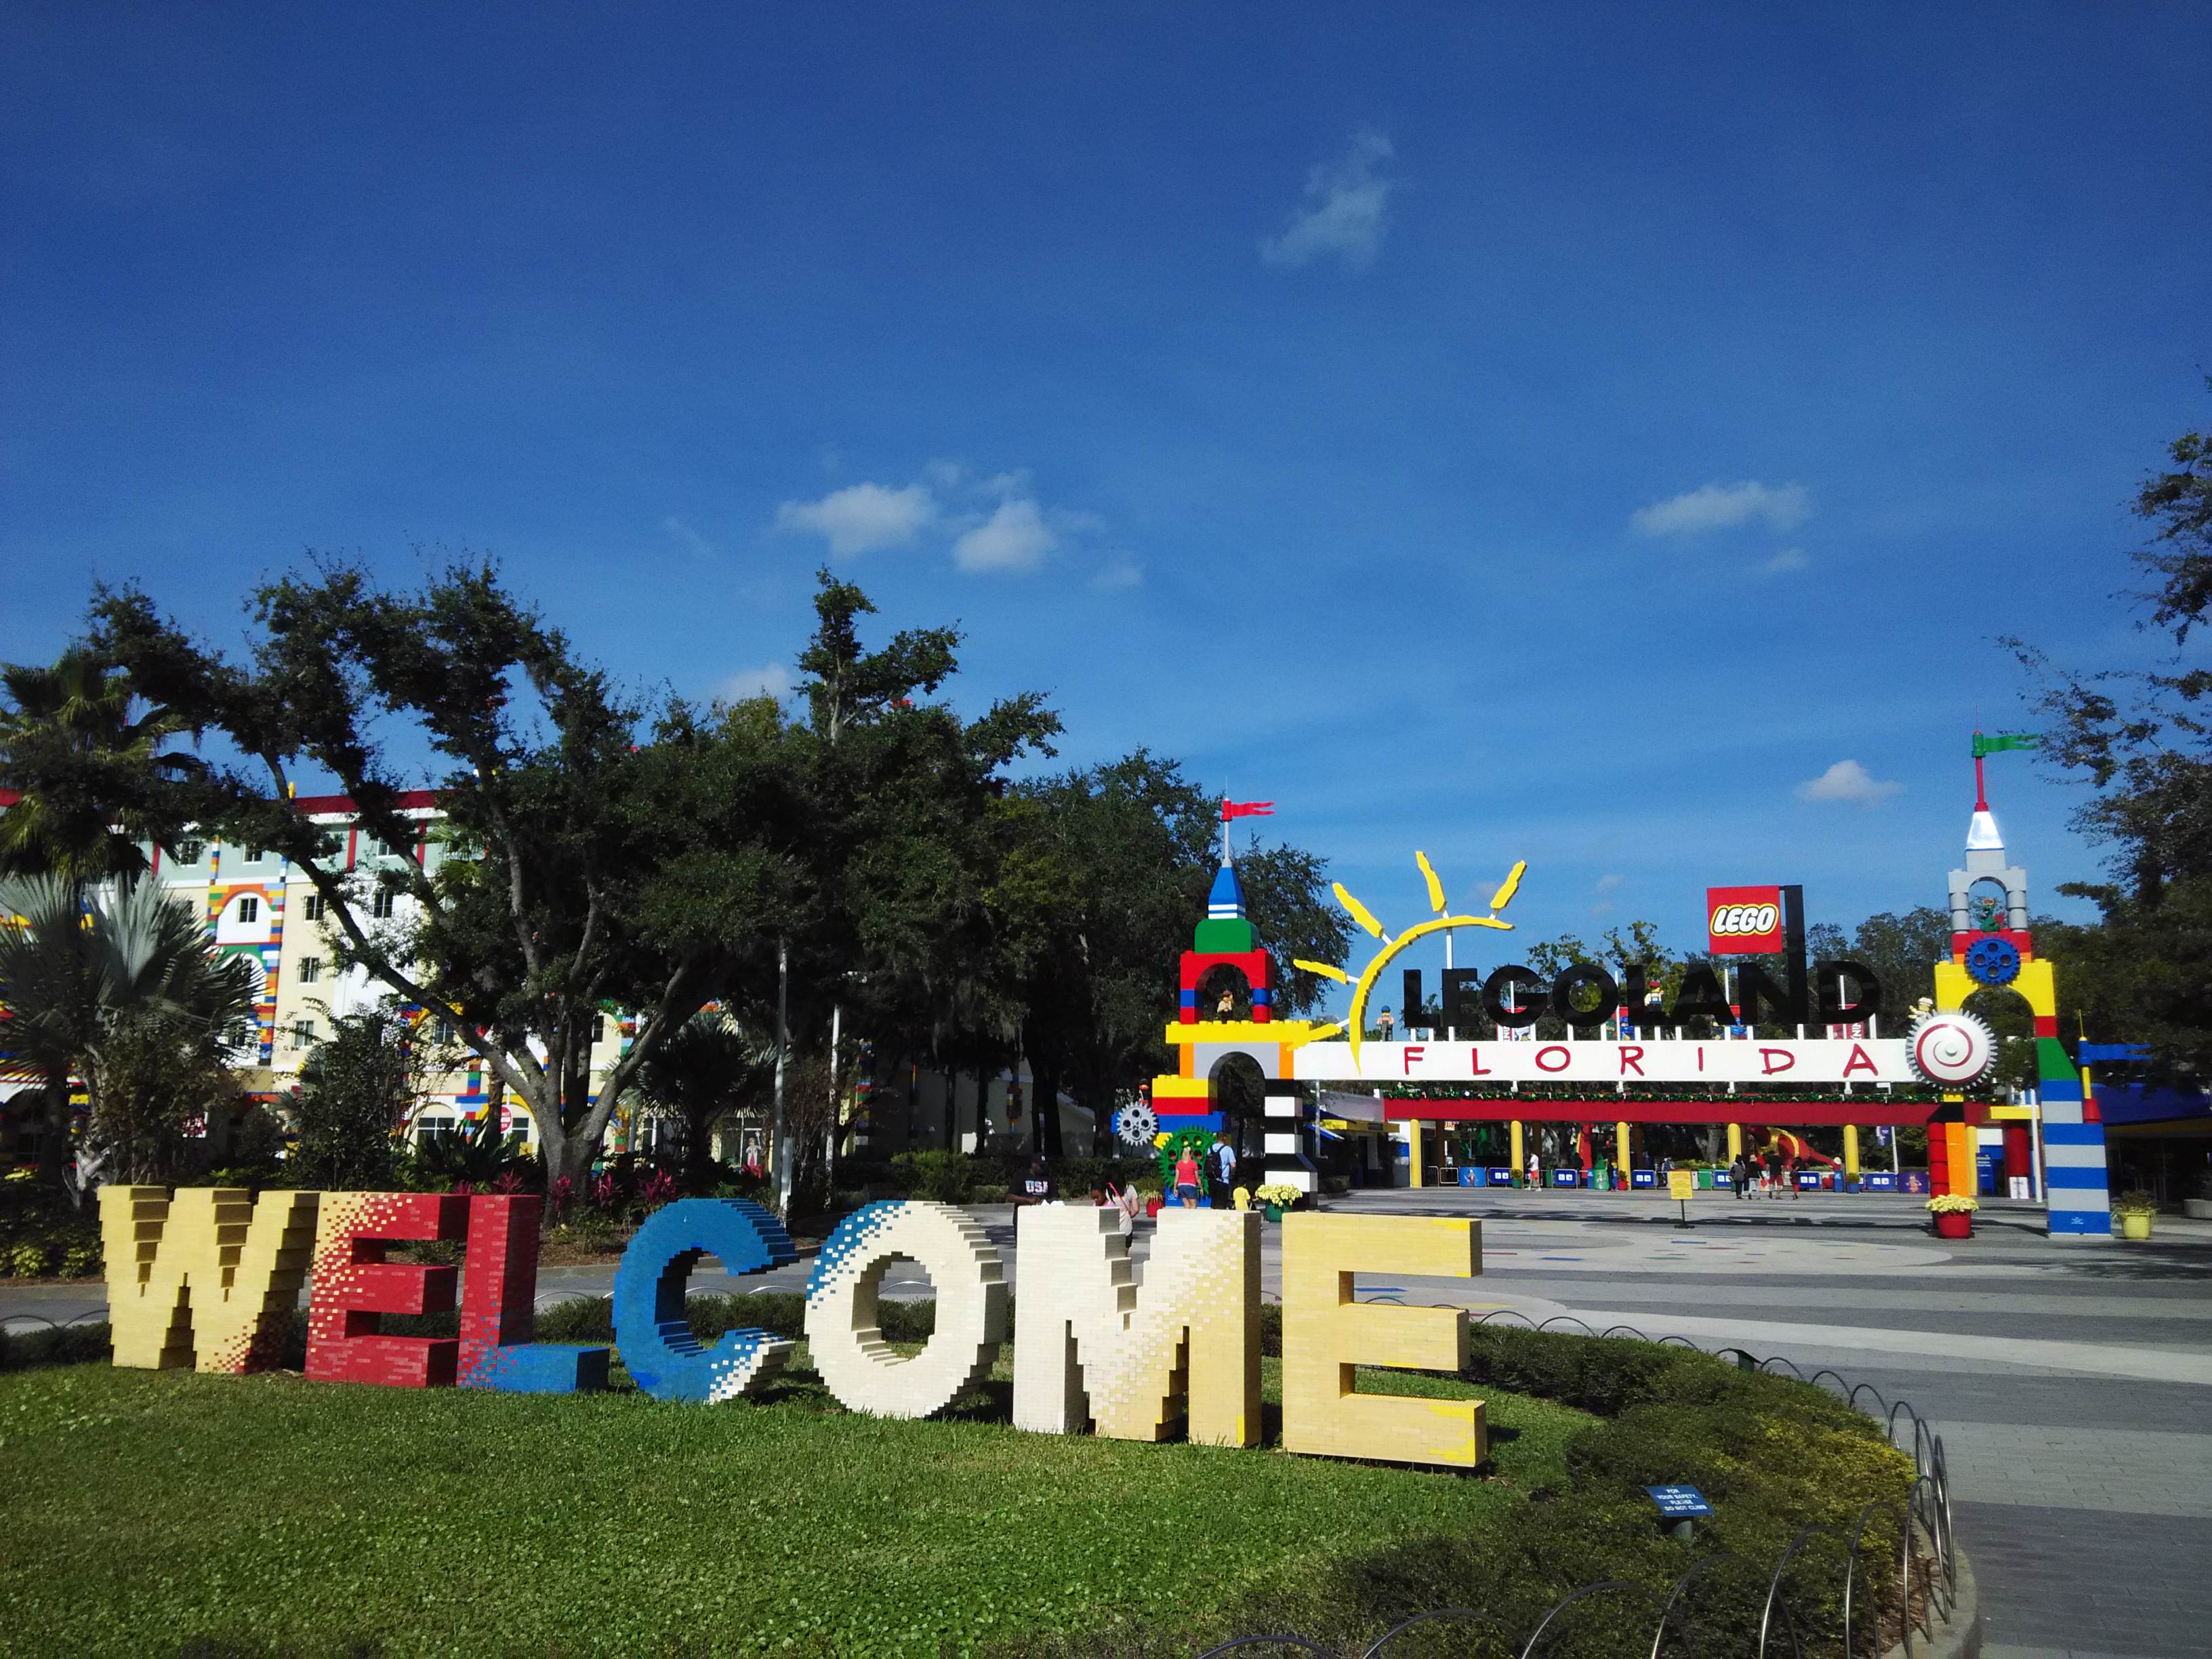 Welcome to Legoland Florida!